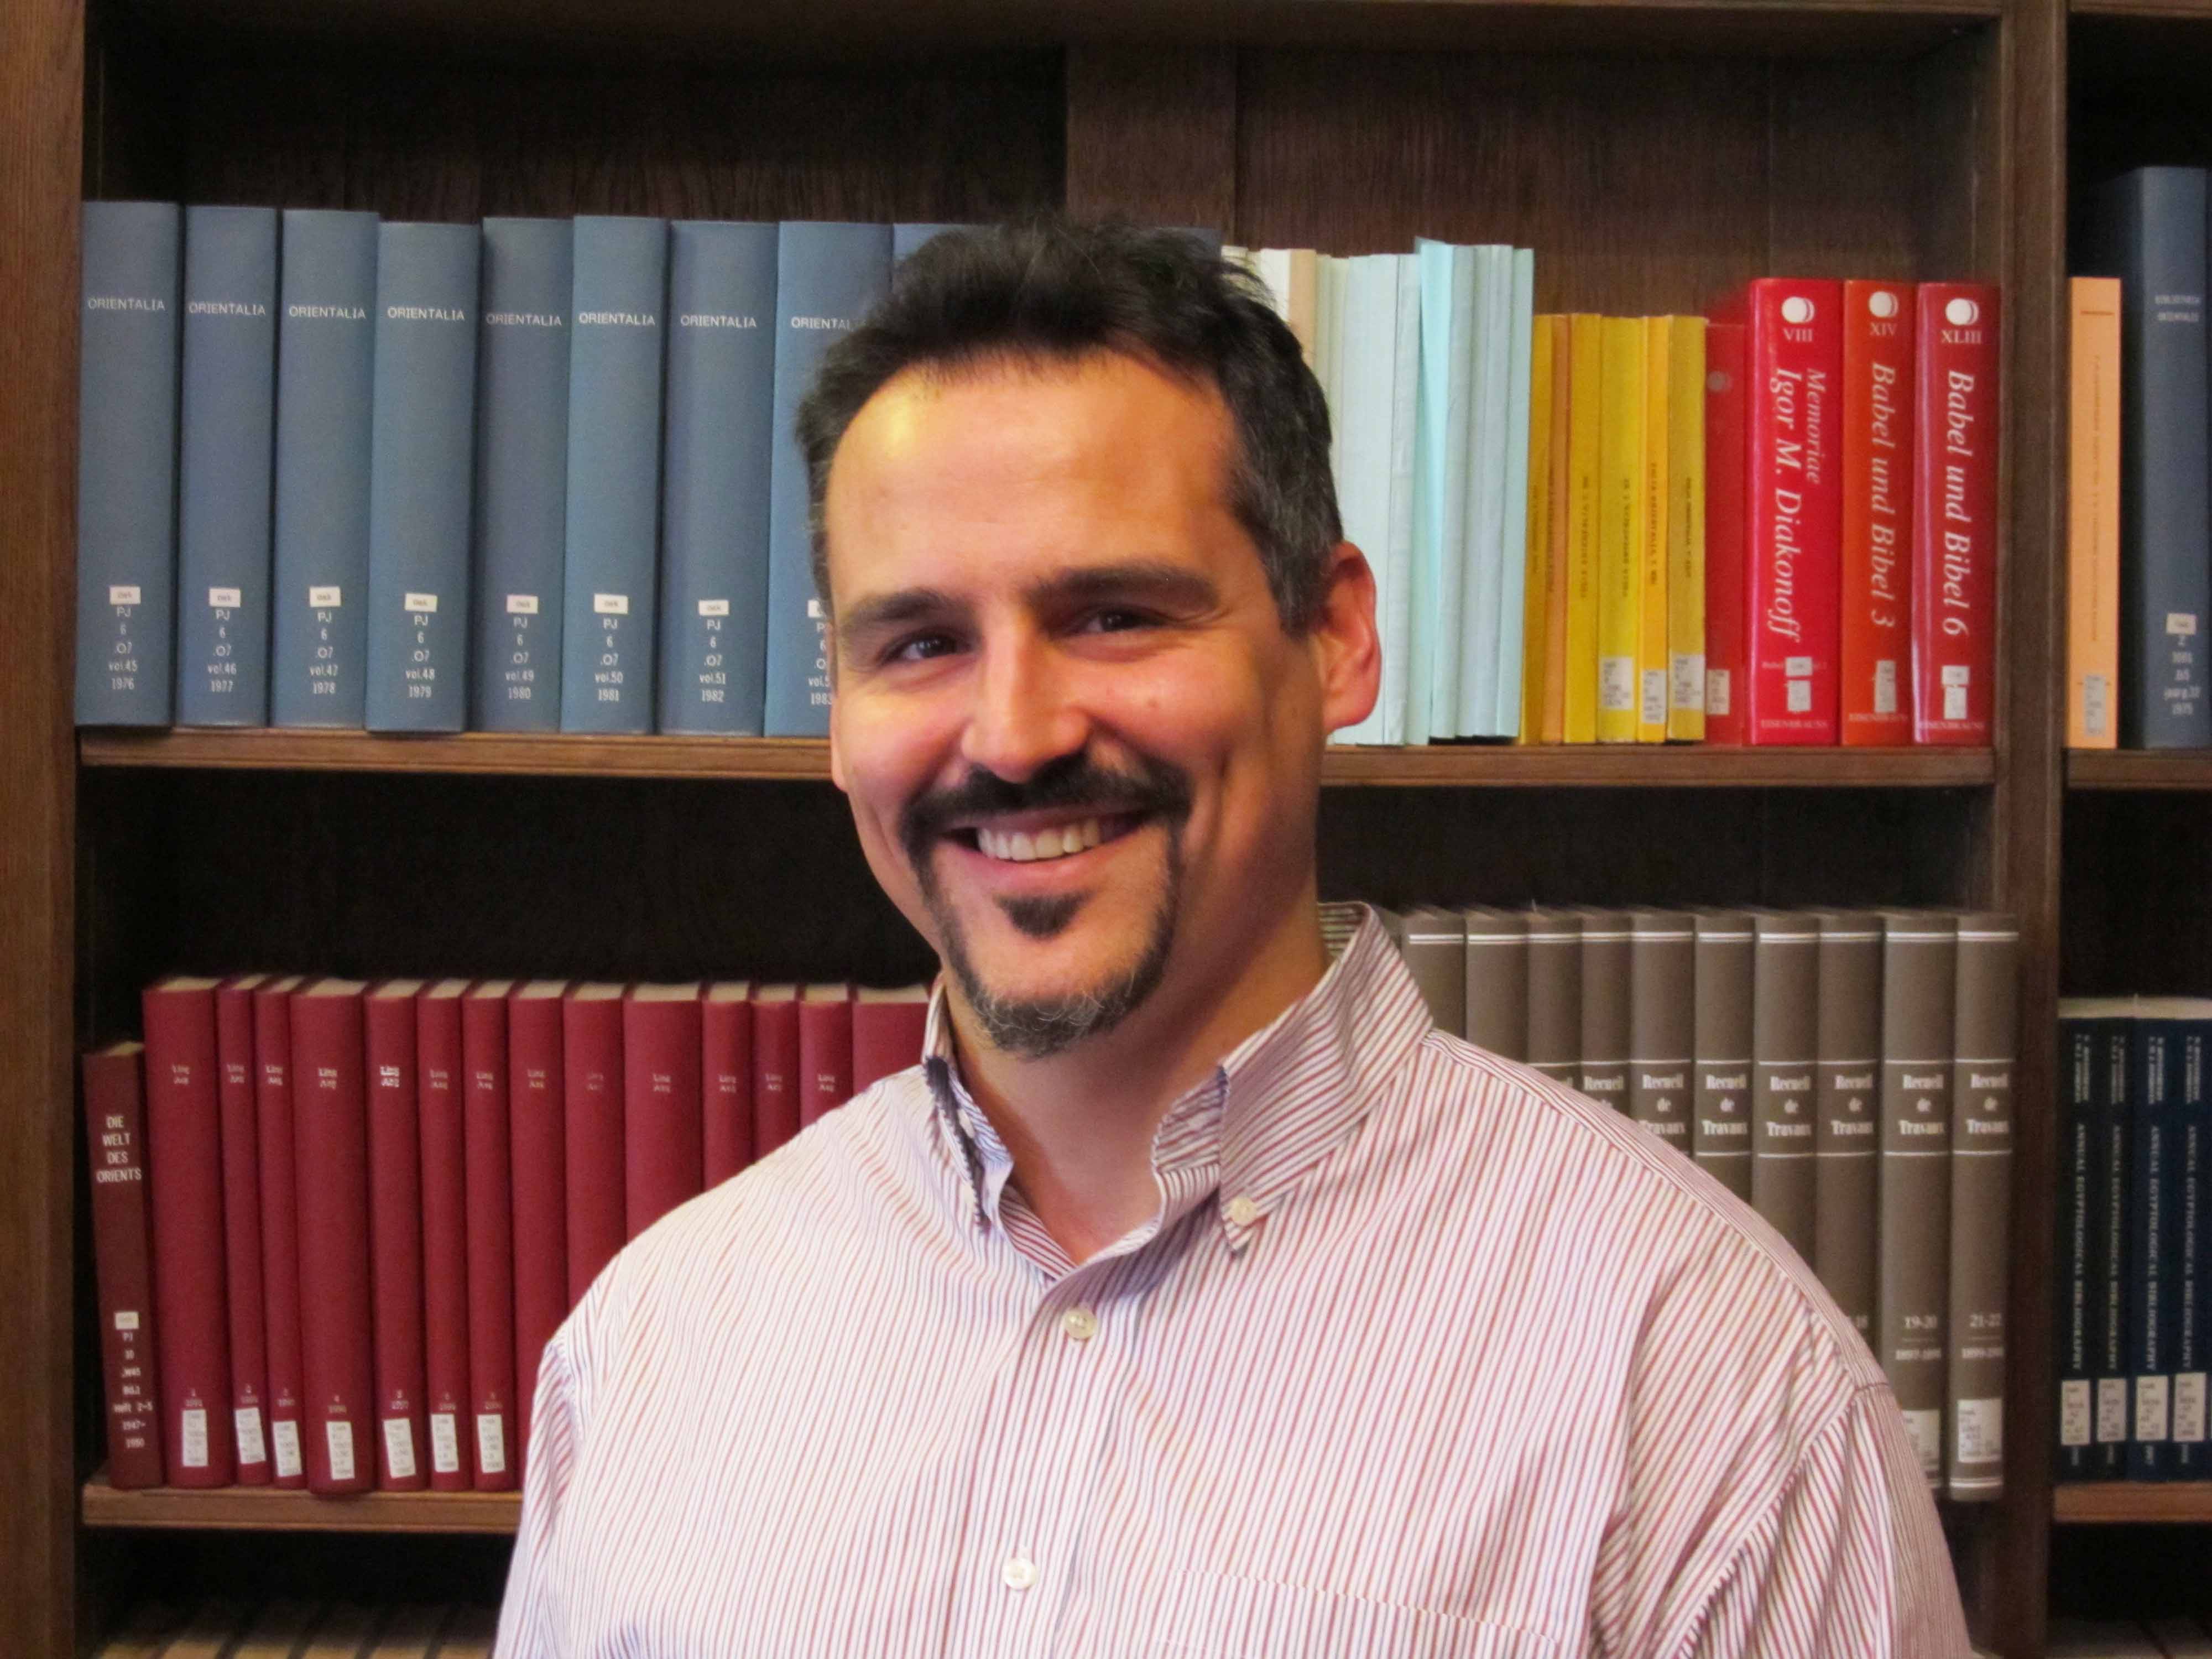 David Ratzan Becomes ISAW's Head Librarian